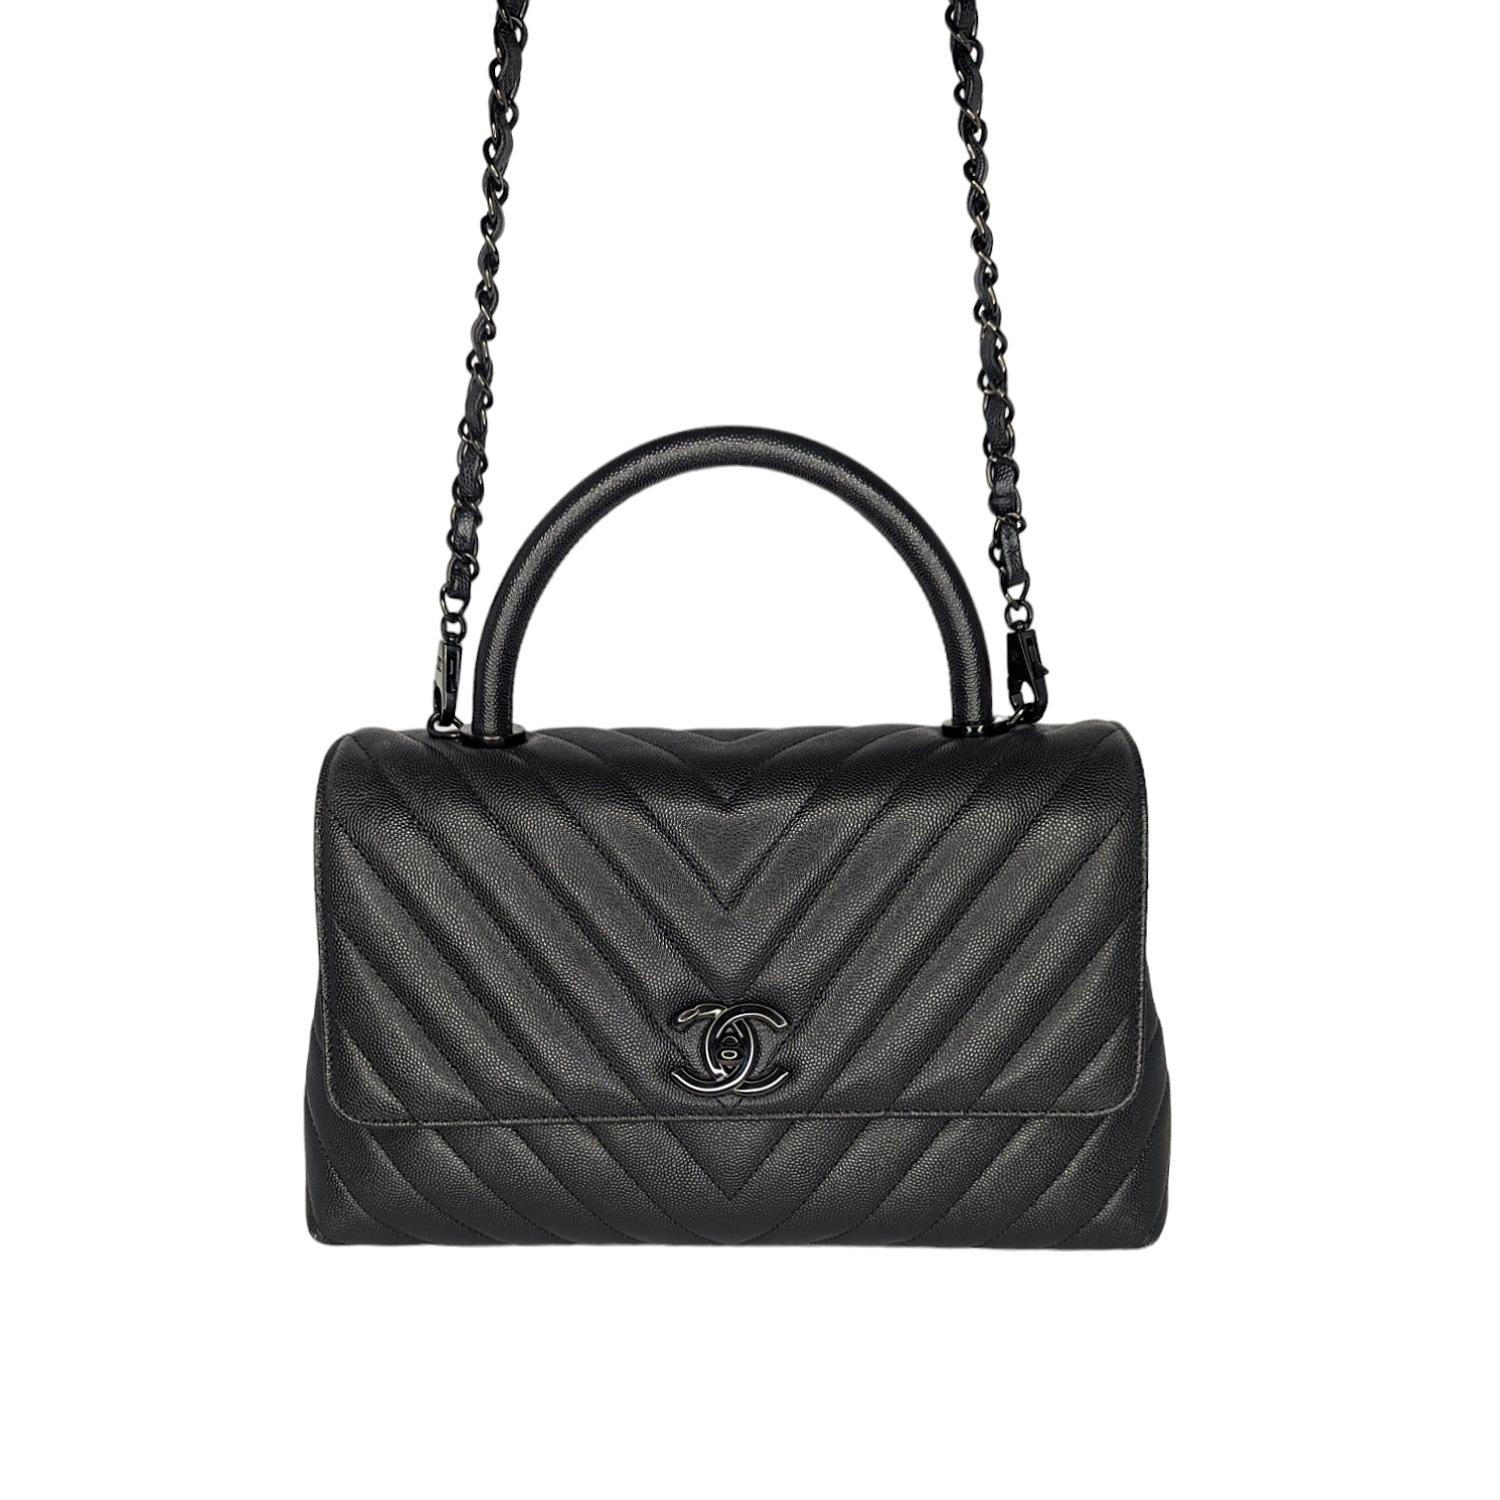 Chanel Medium Chevron So Black Coco Handle Bag In Good Condition For Sale In Scottsdale, AZ